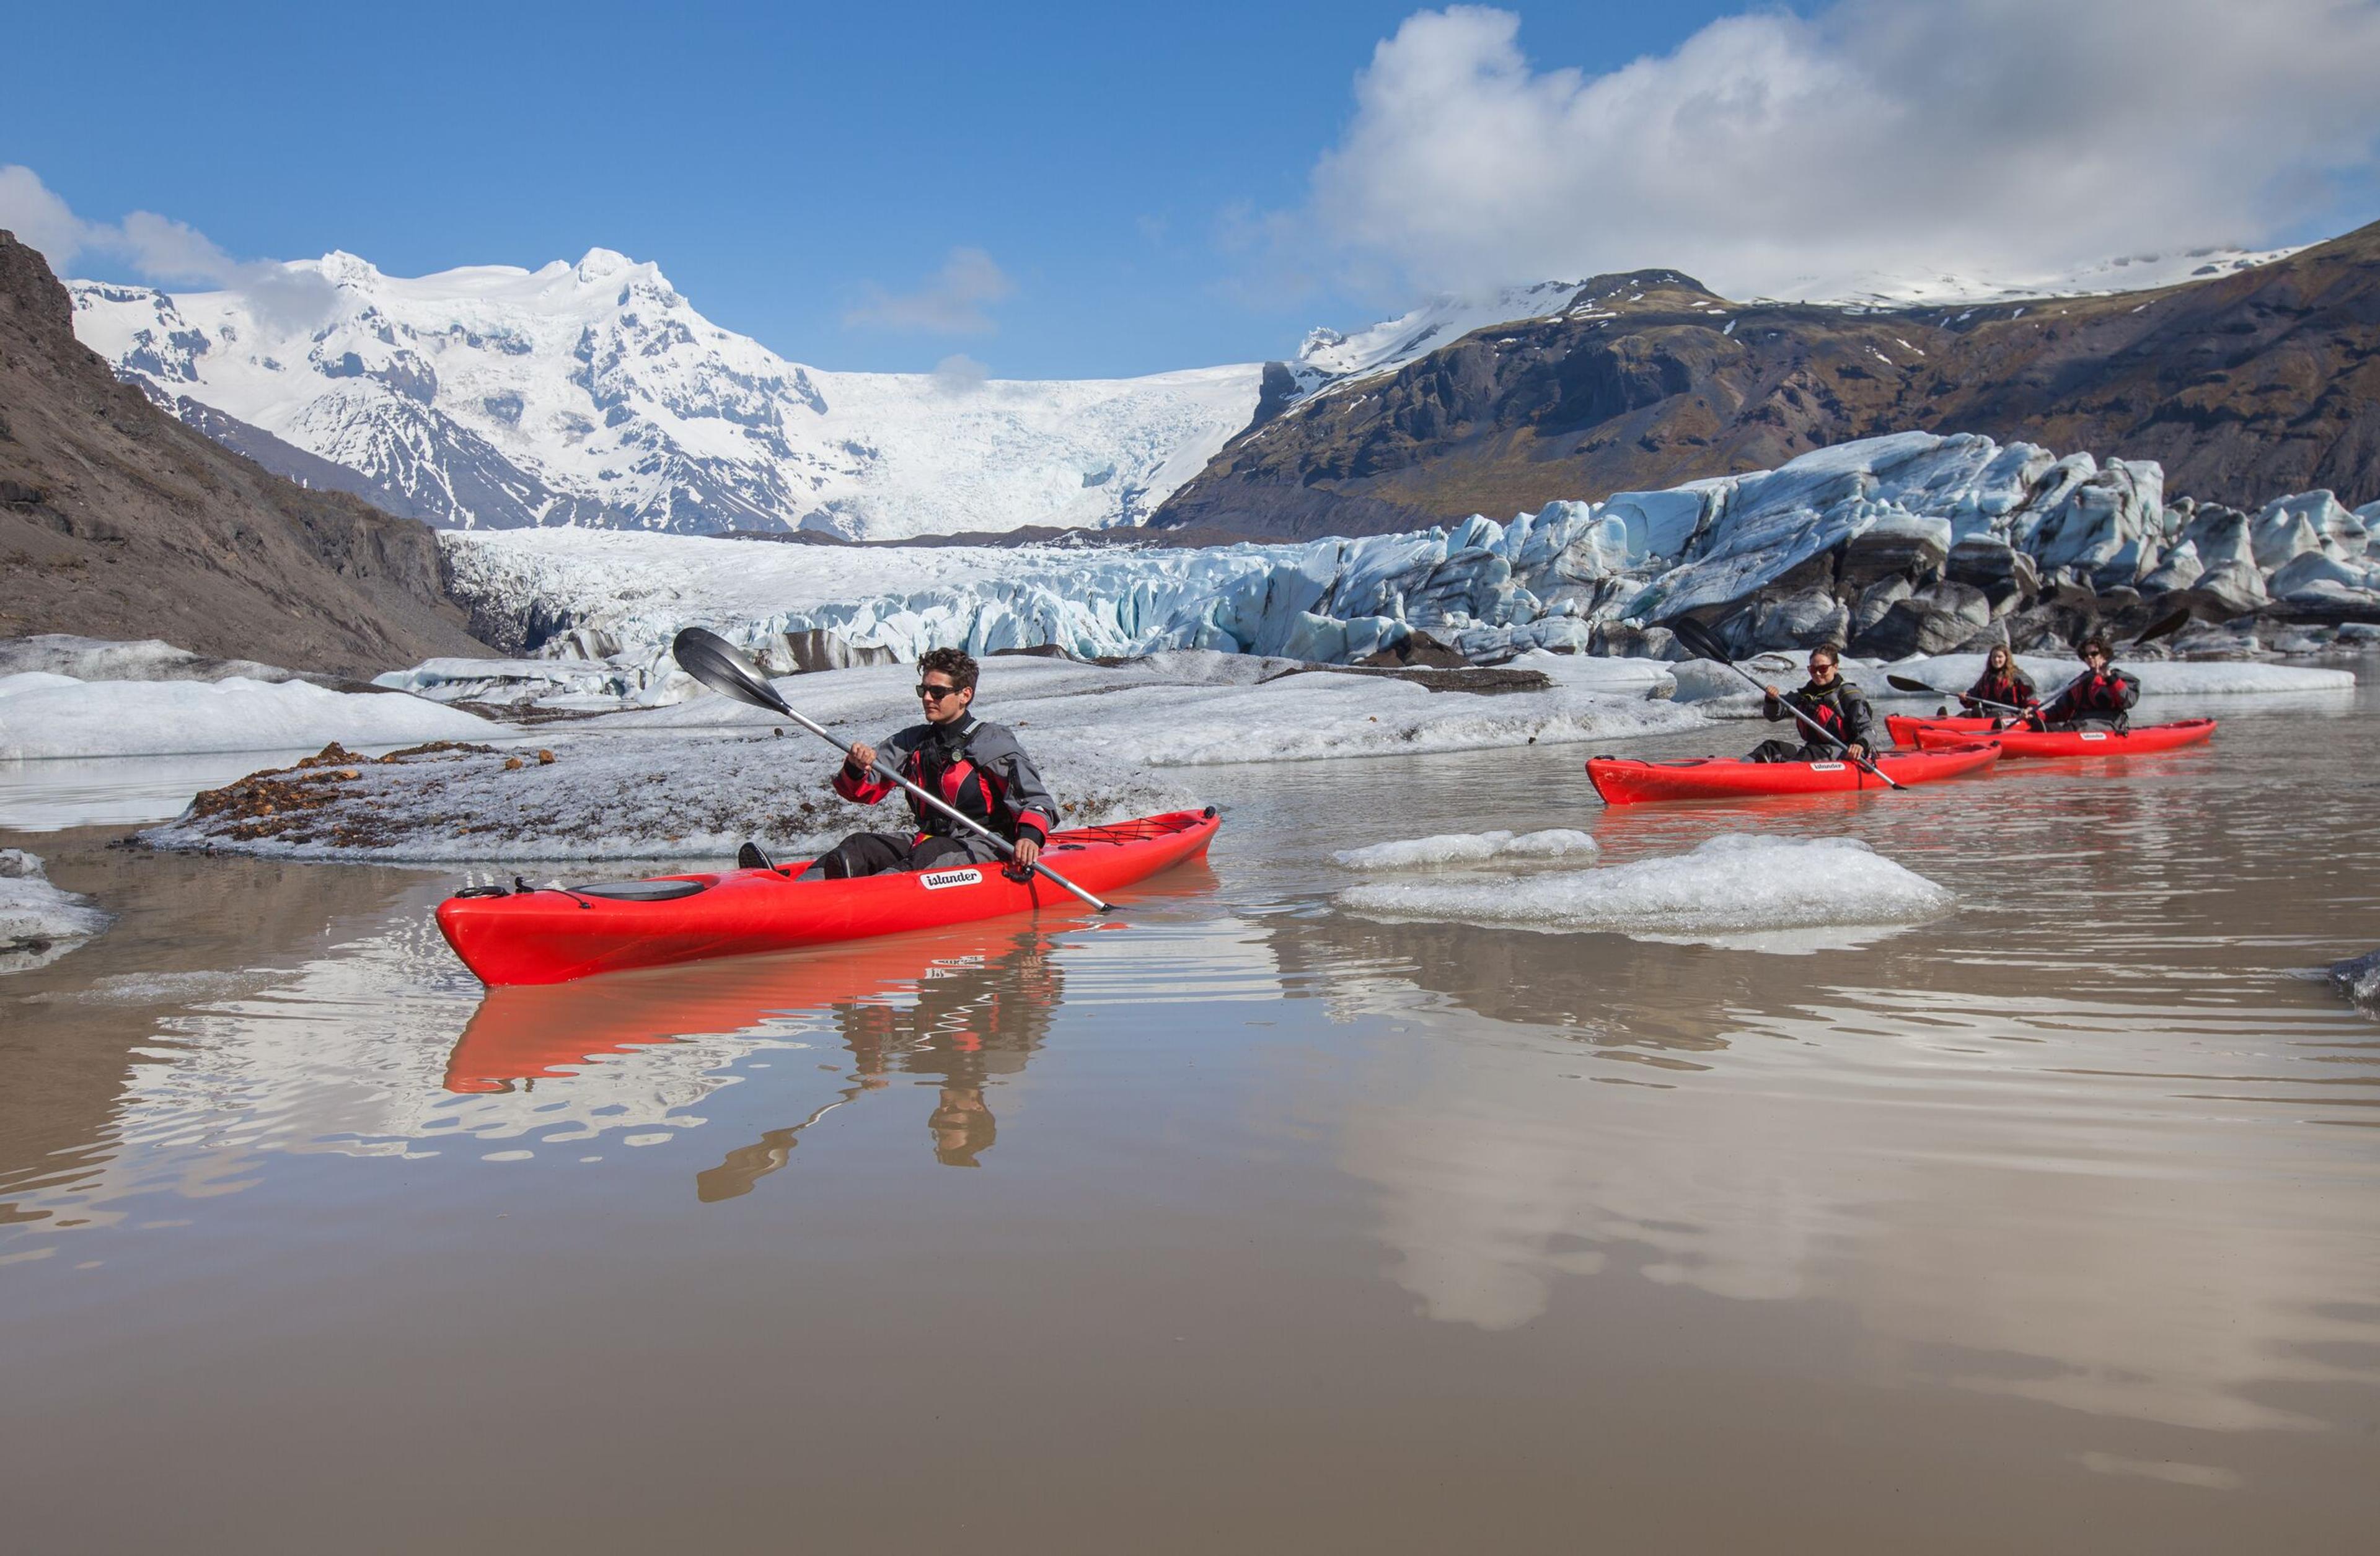 Kayakers in orange kayaks paddling near massive blue glaciers in Iceland.